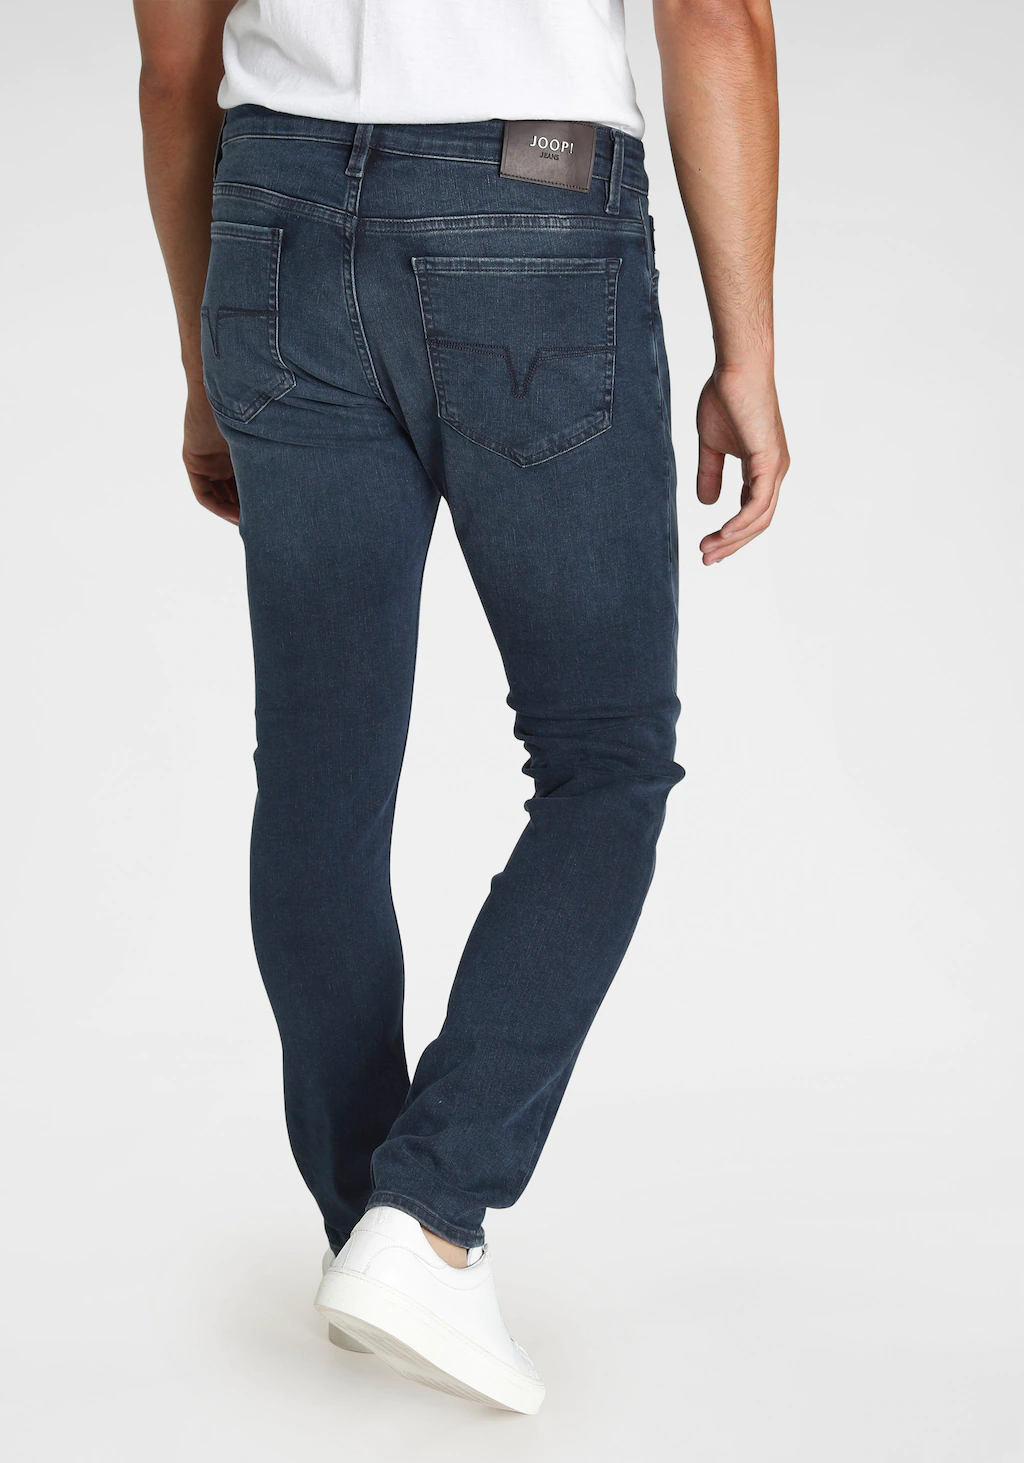 Joop Jeans 5-Pocket-Jeans "Stephen" günstig online kaufen